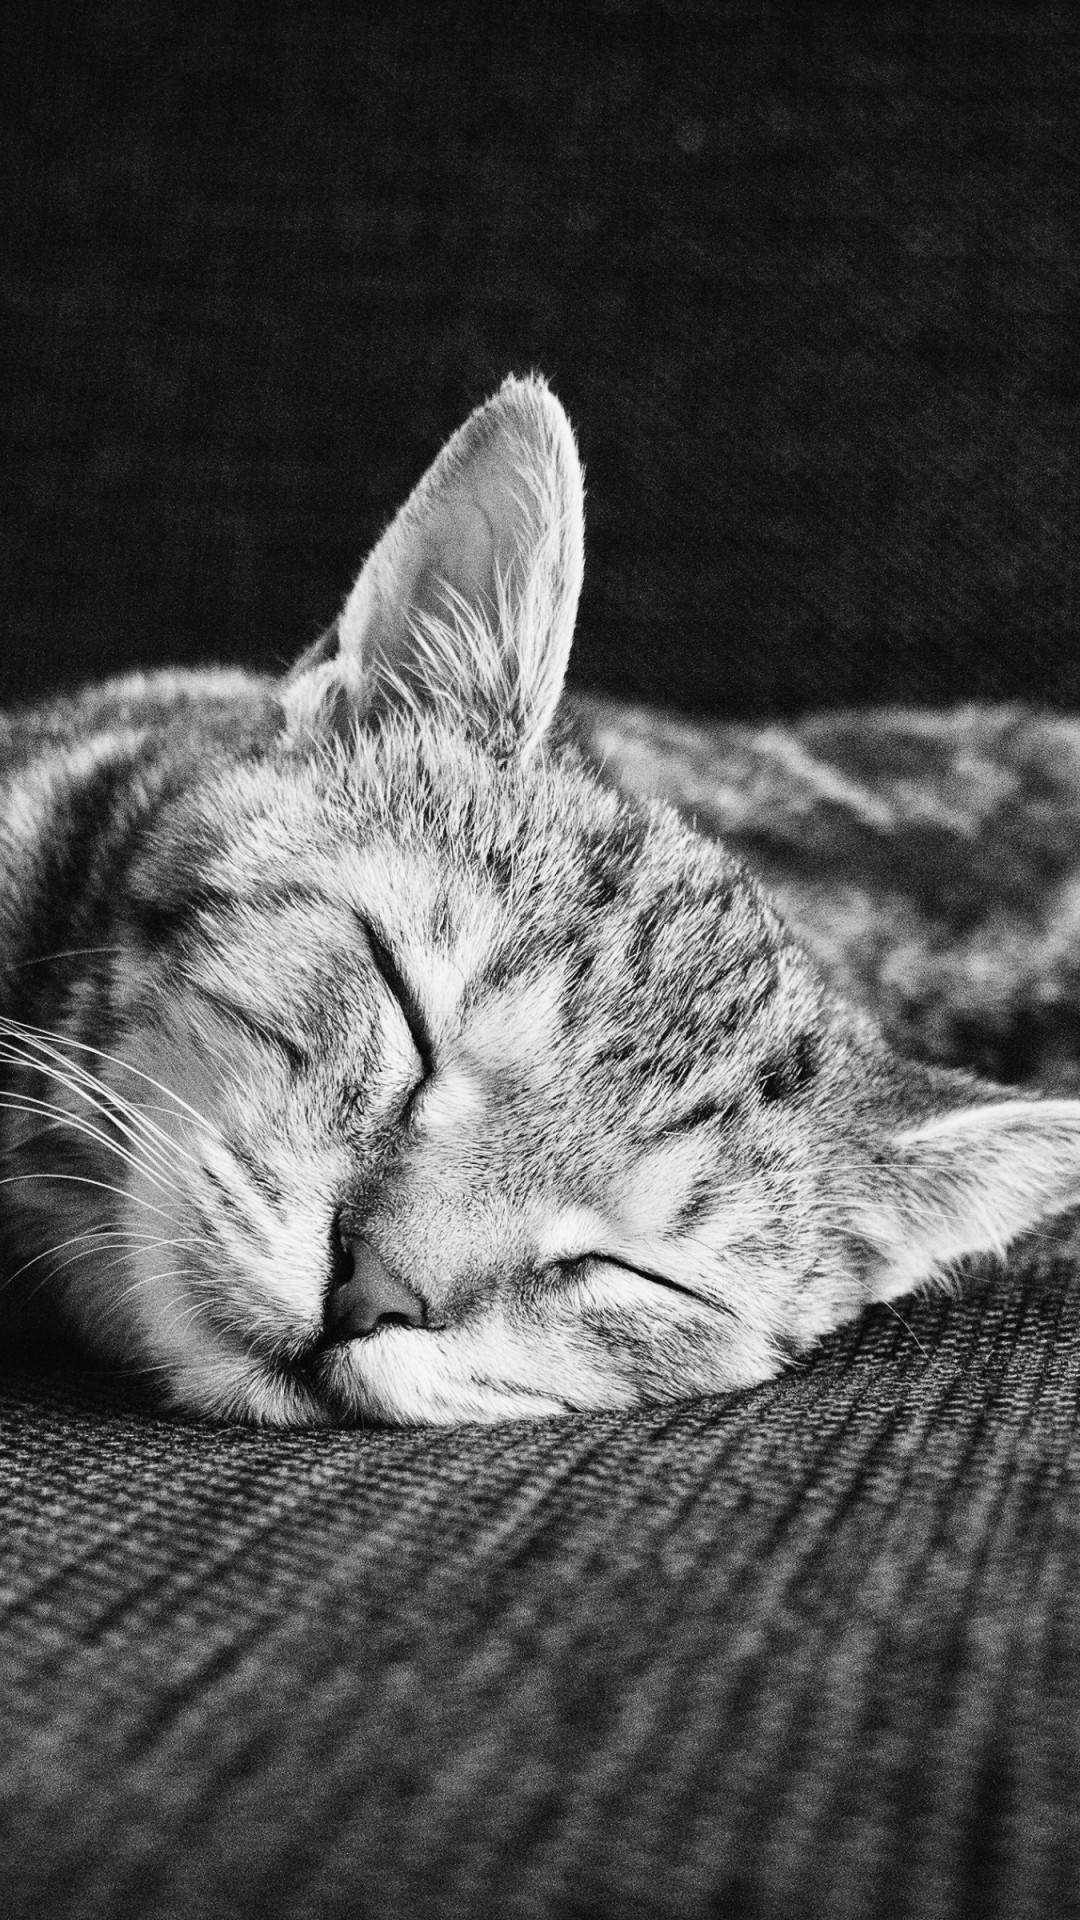 Zen of sleeping kitten wallpaper 1080x1920